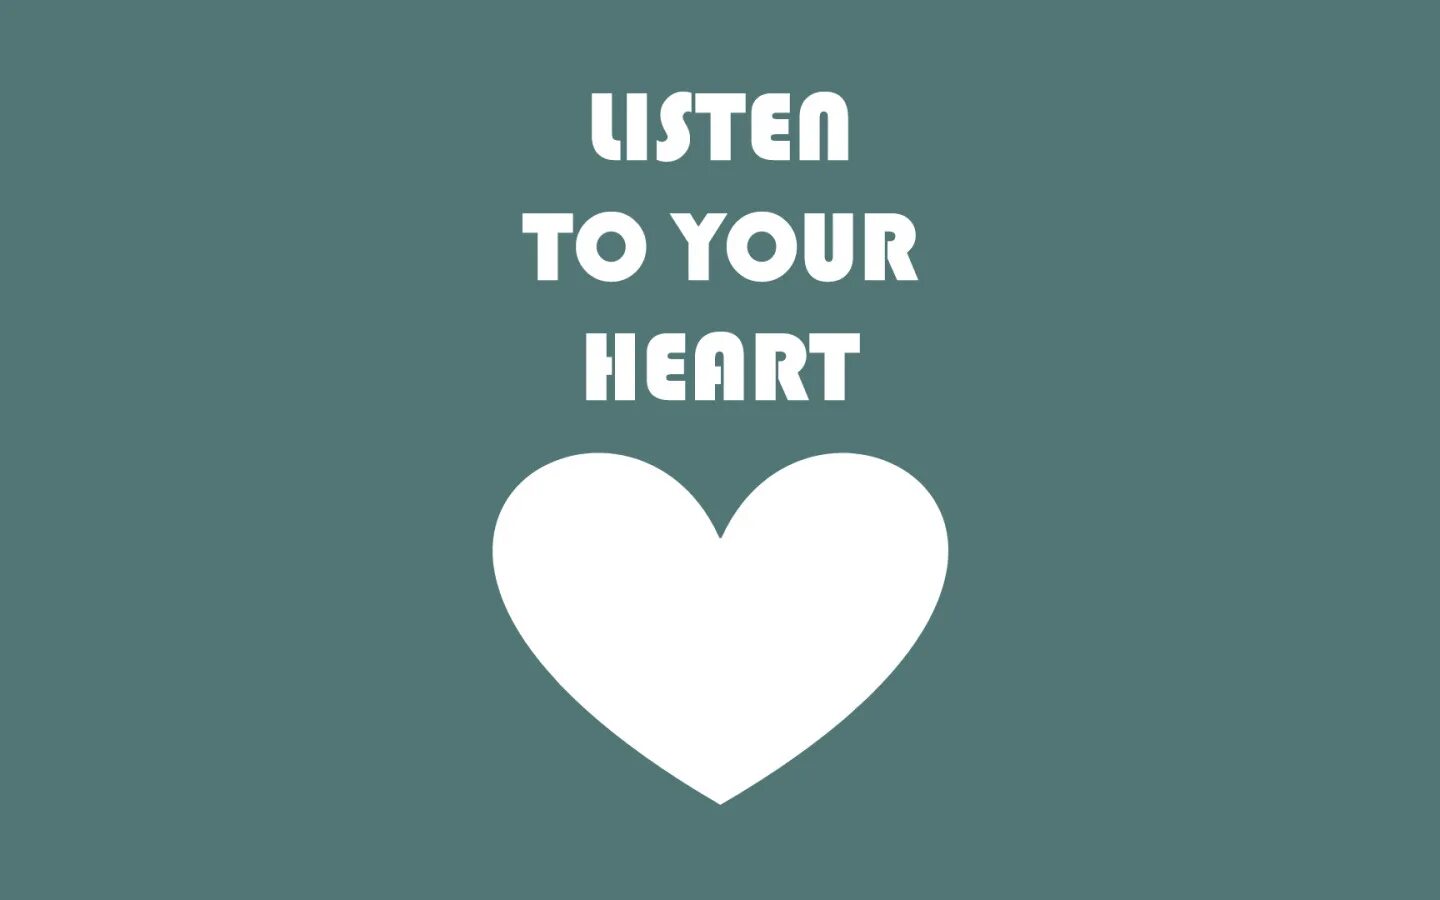 Слушай свое сердце. Слушай свое сердце на английском. Слушай свое сердце картинки. Послушай надпись. Best of your heart